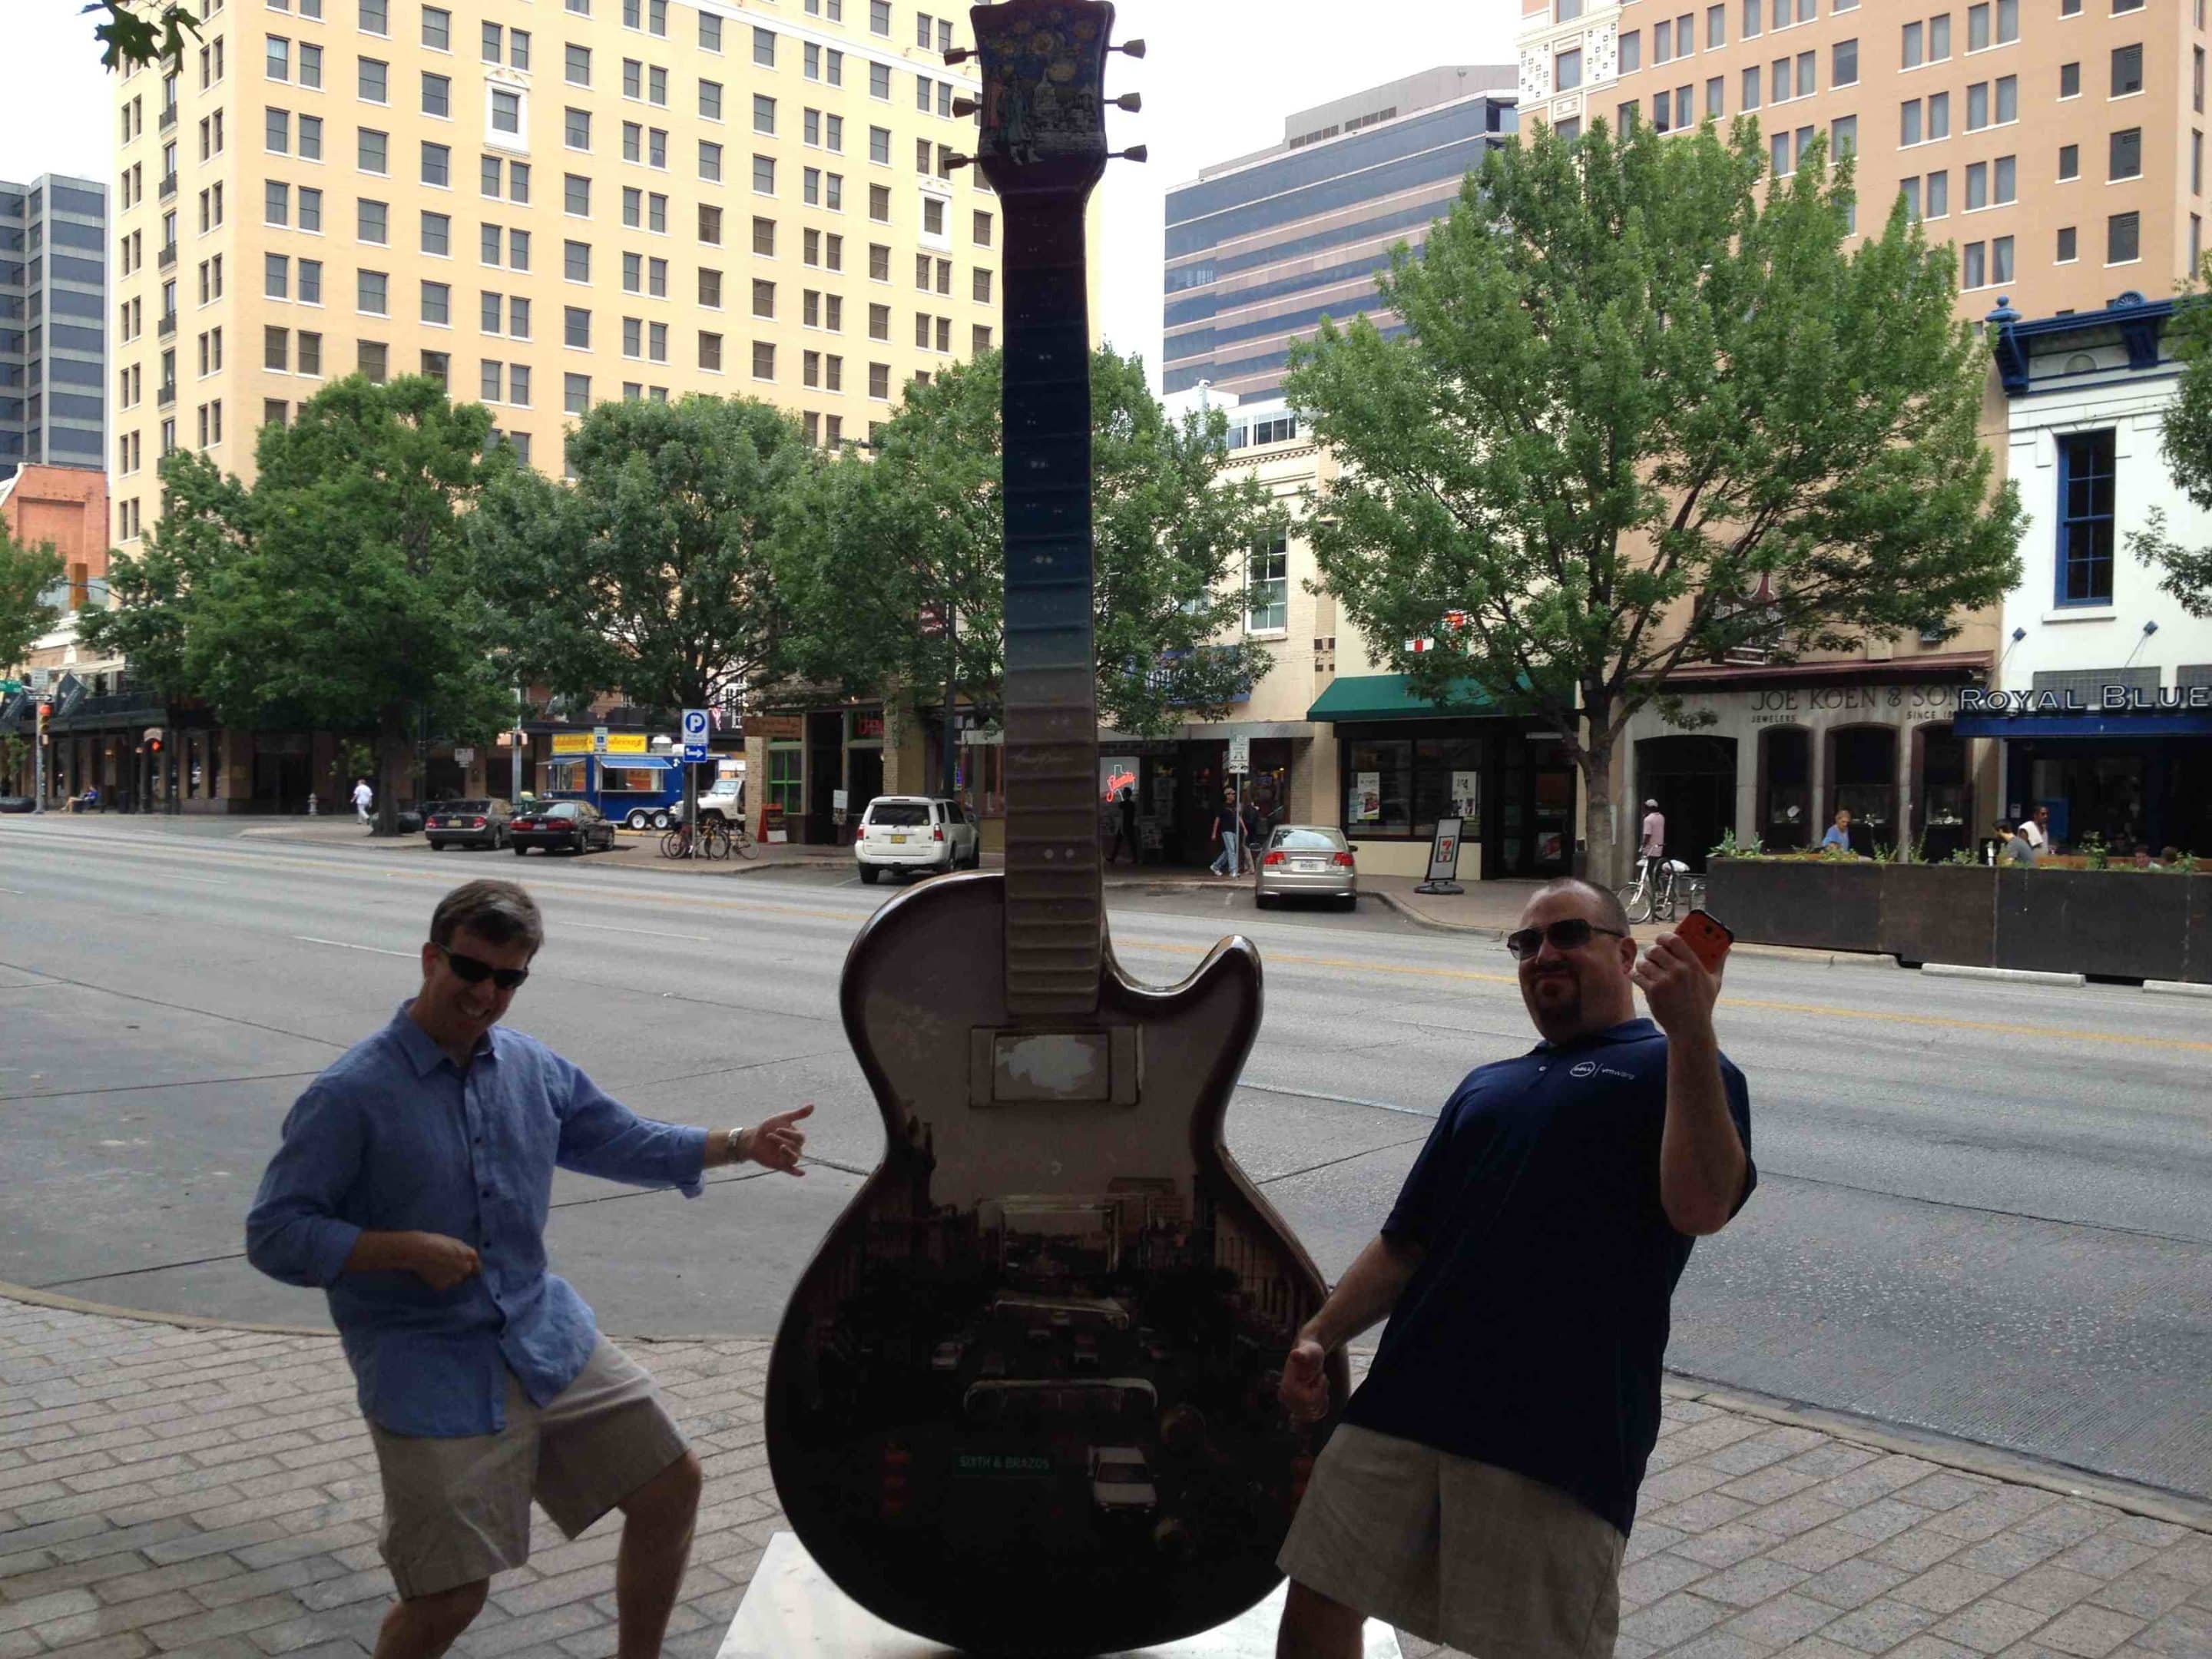 Two men doing air guitar next to giant guitar.